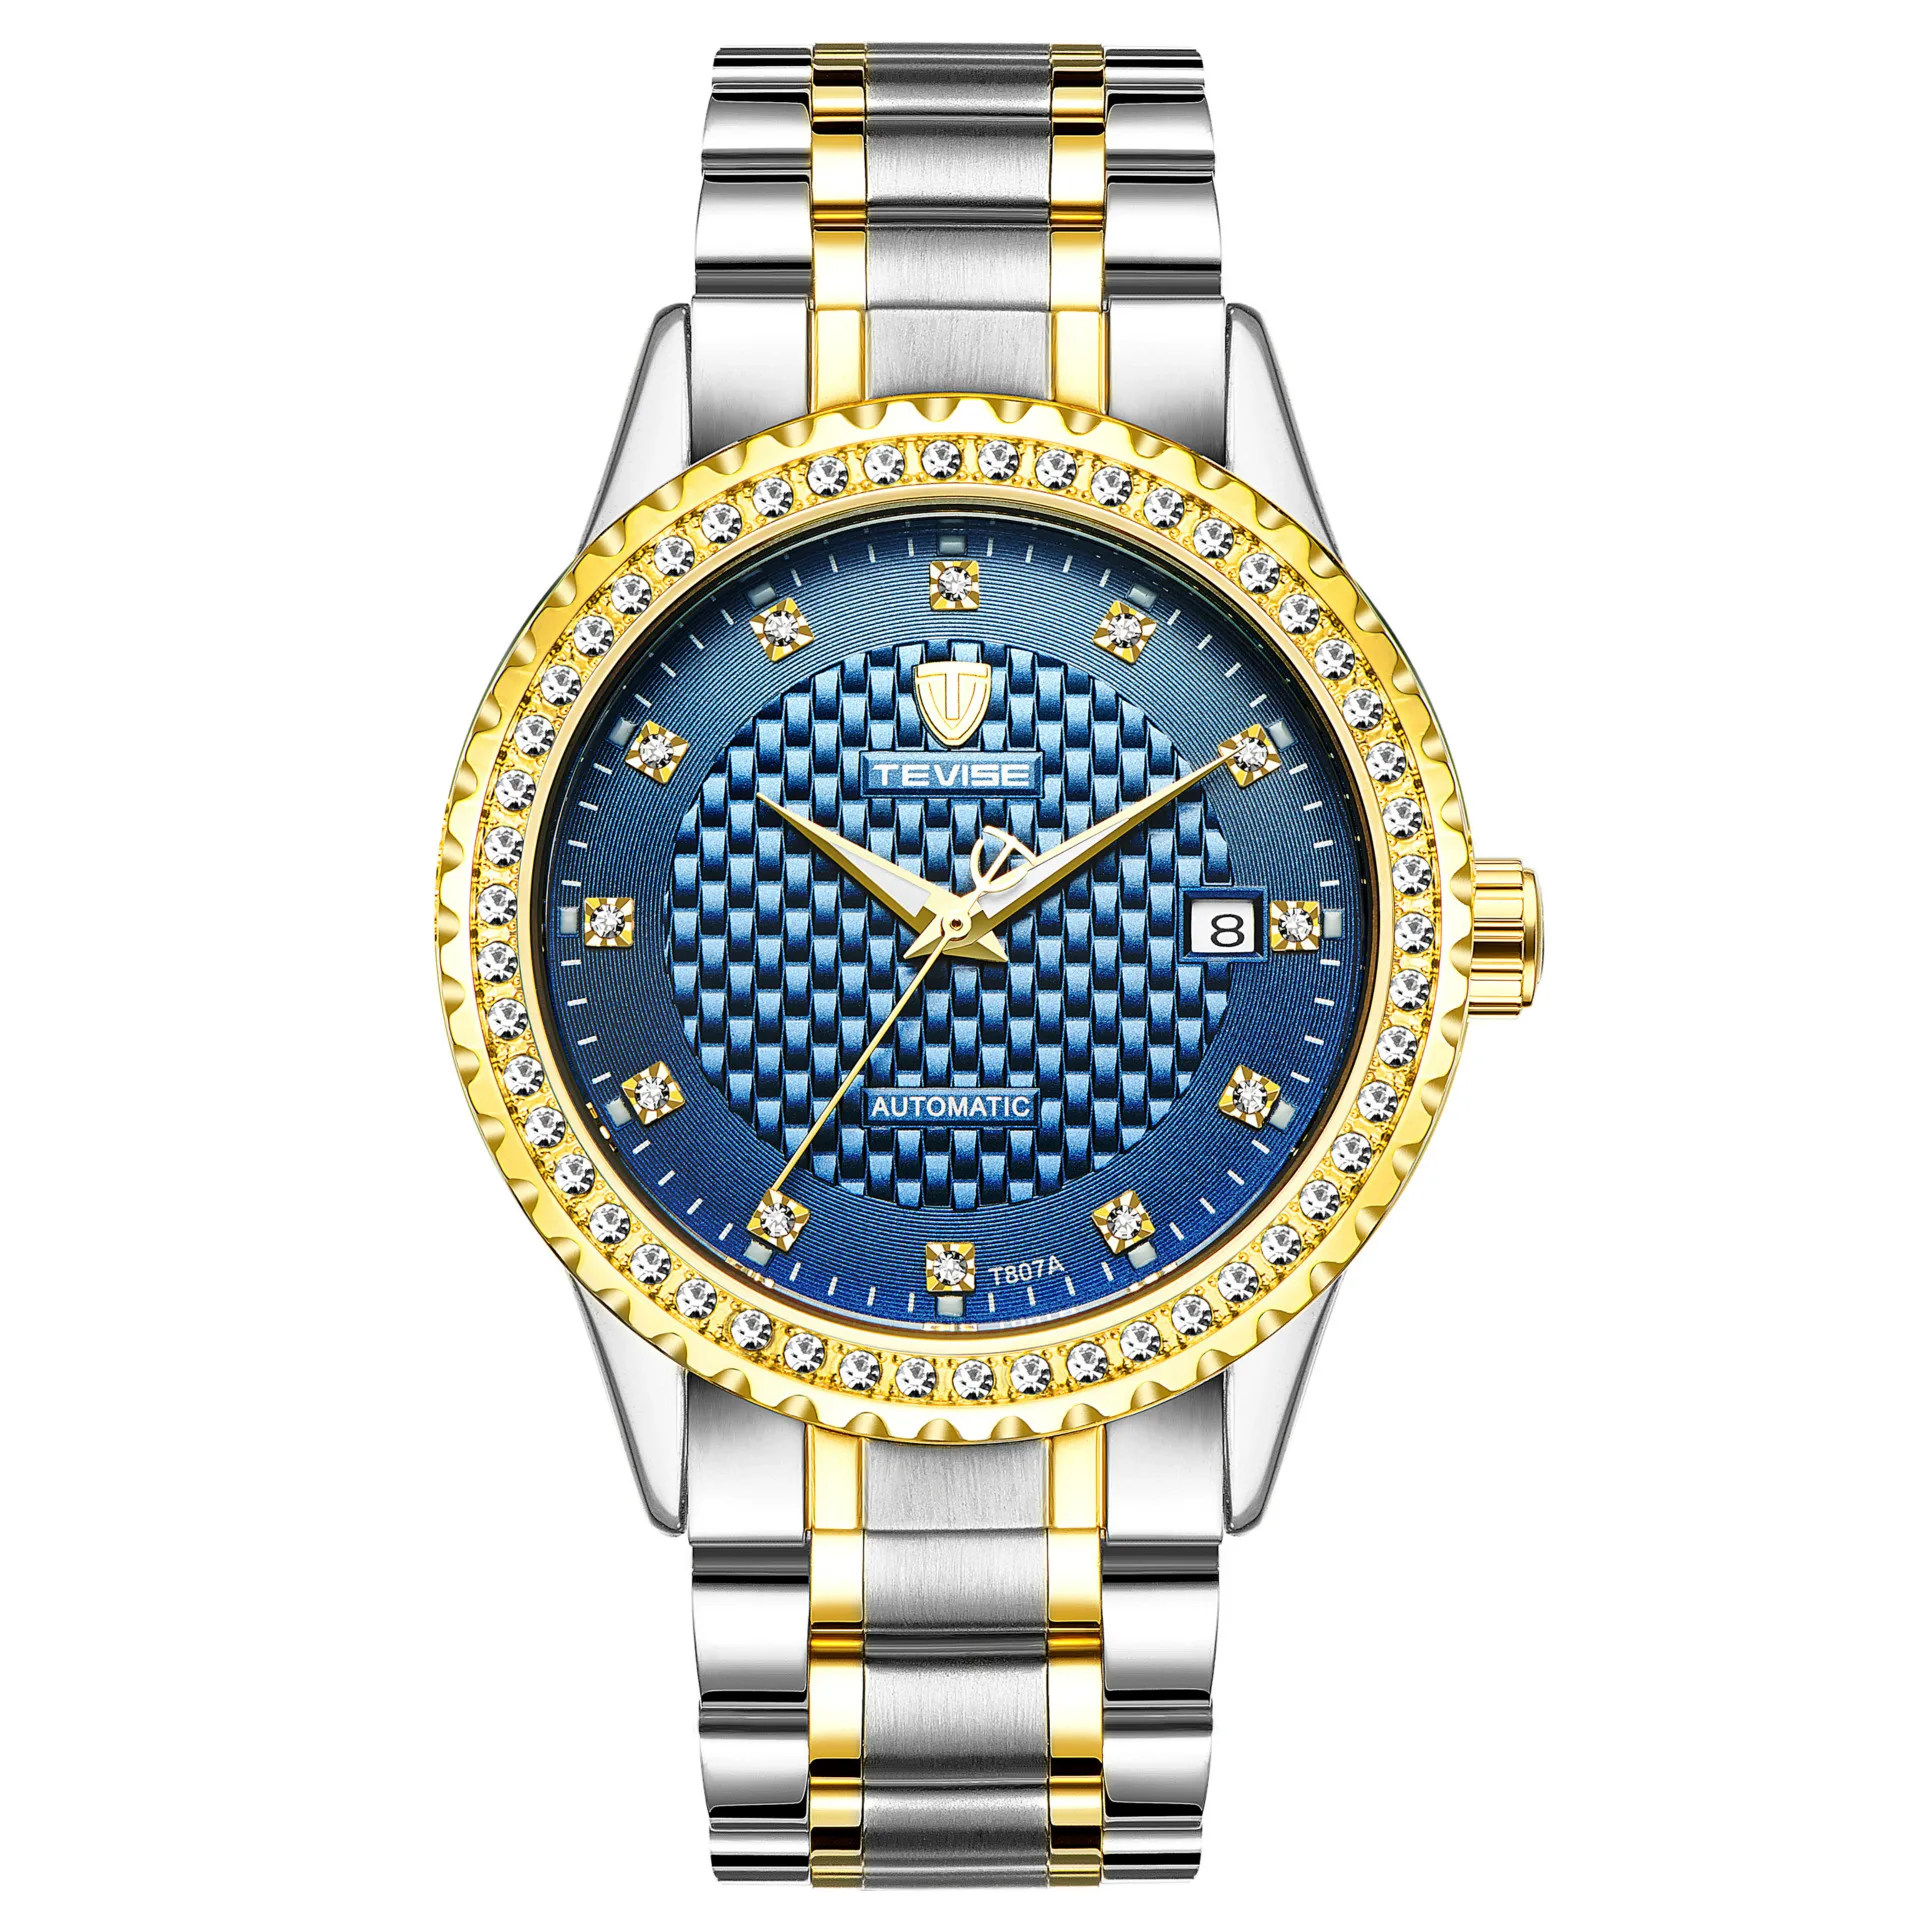 Watch business leisure diamond inlaid men's automatic mechanical calendar waterproof watch